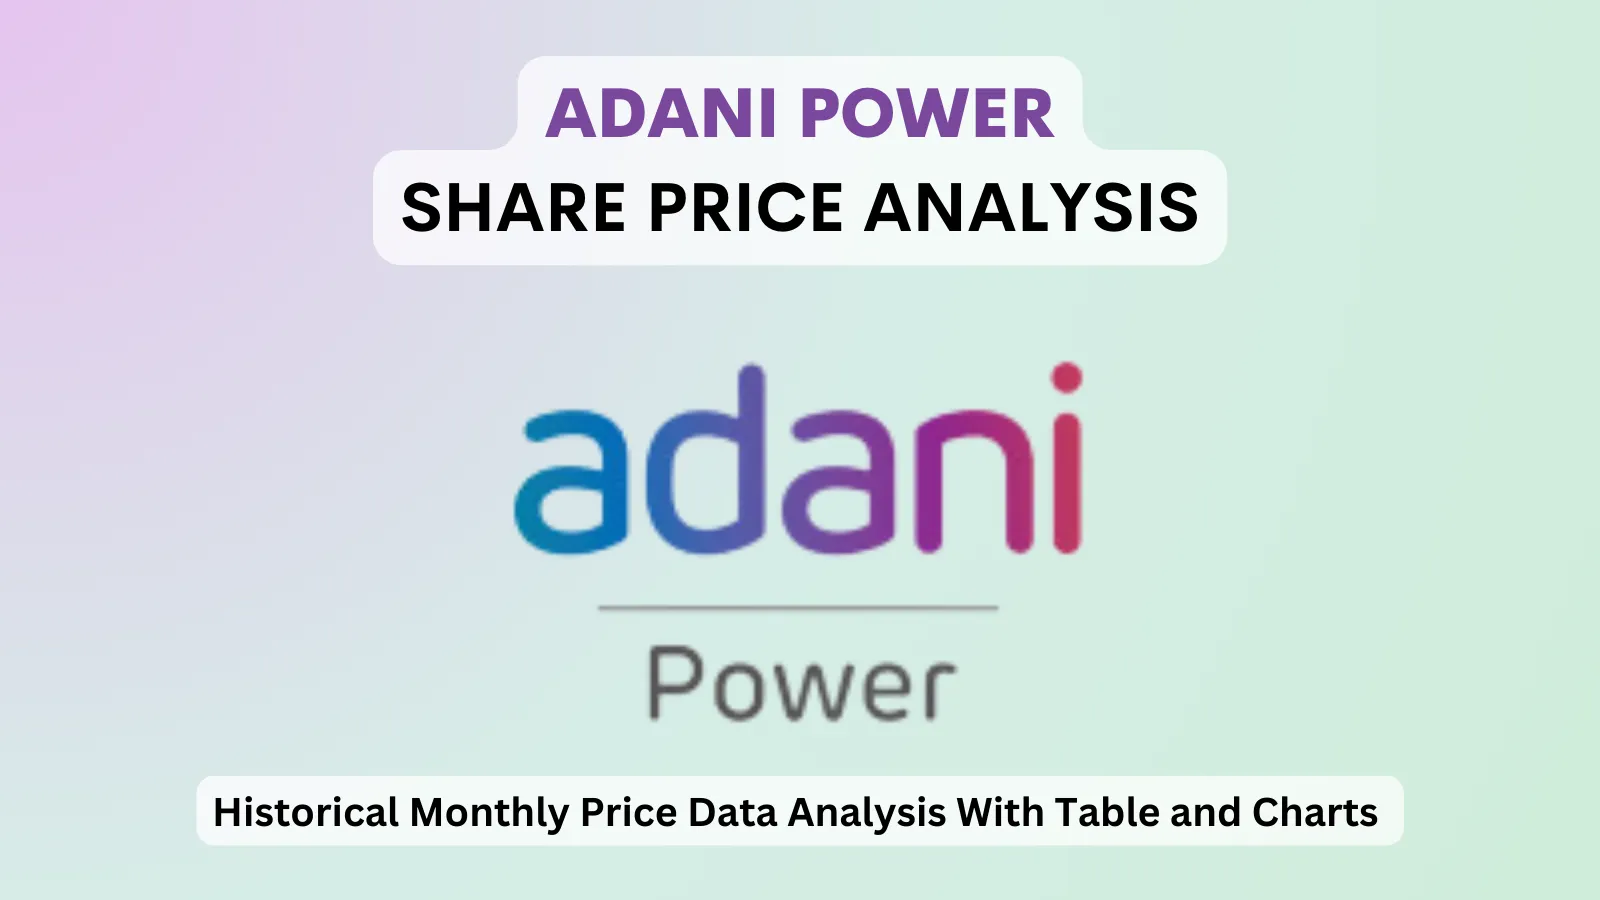 Adani Power share price analysis